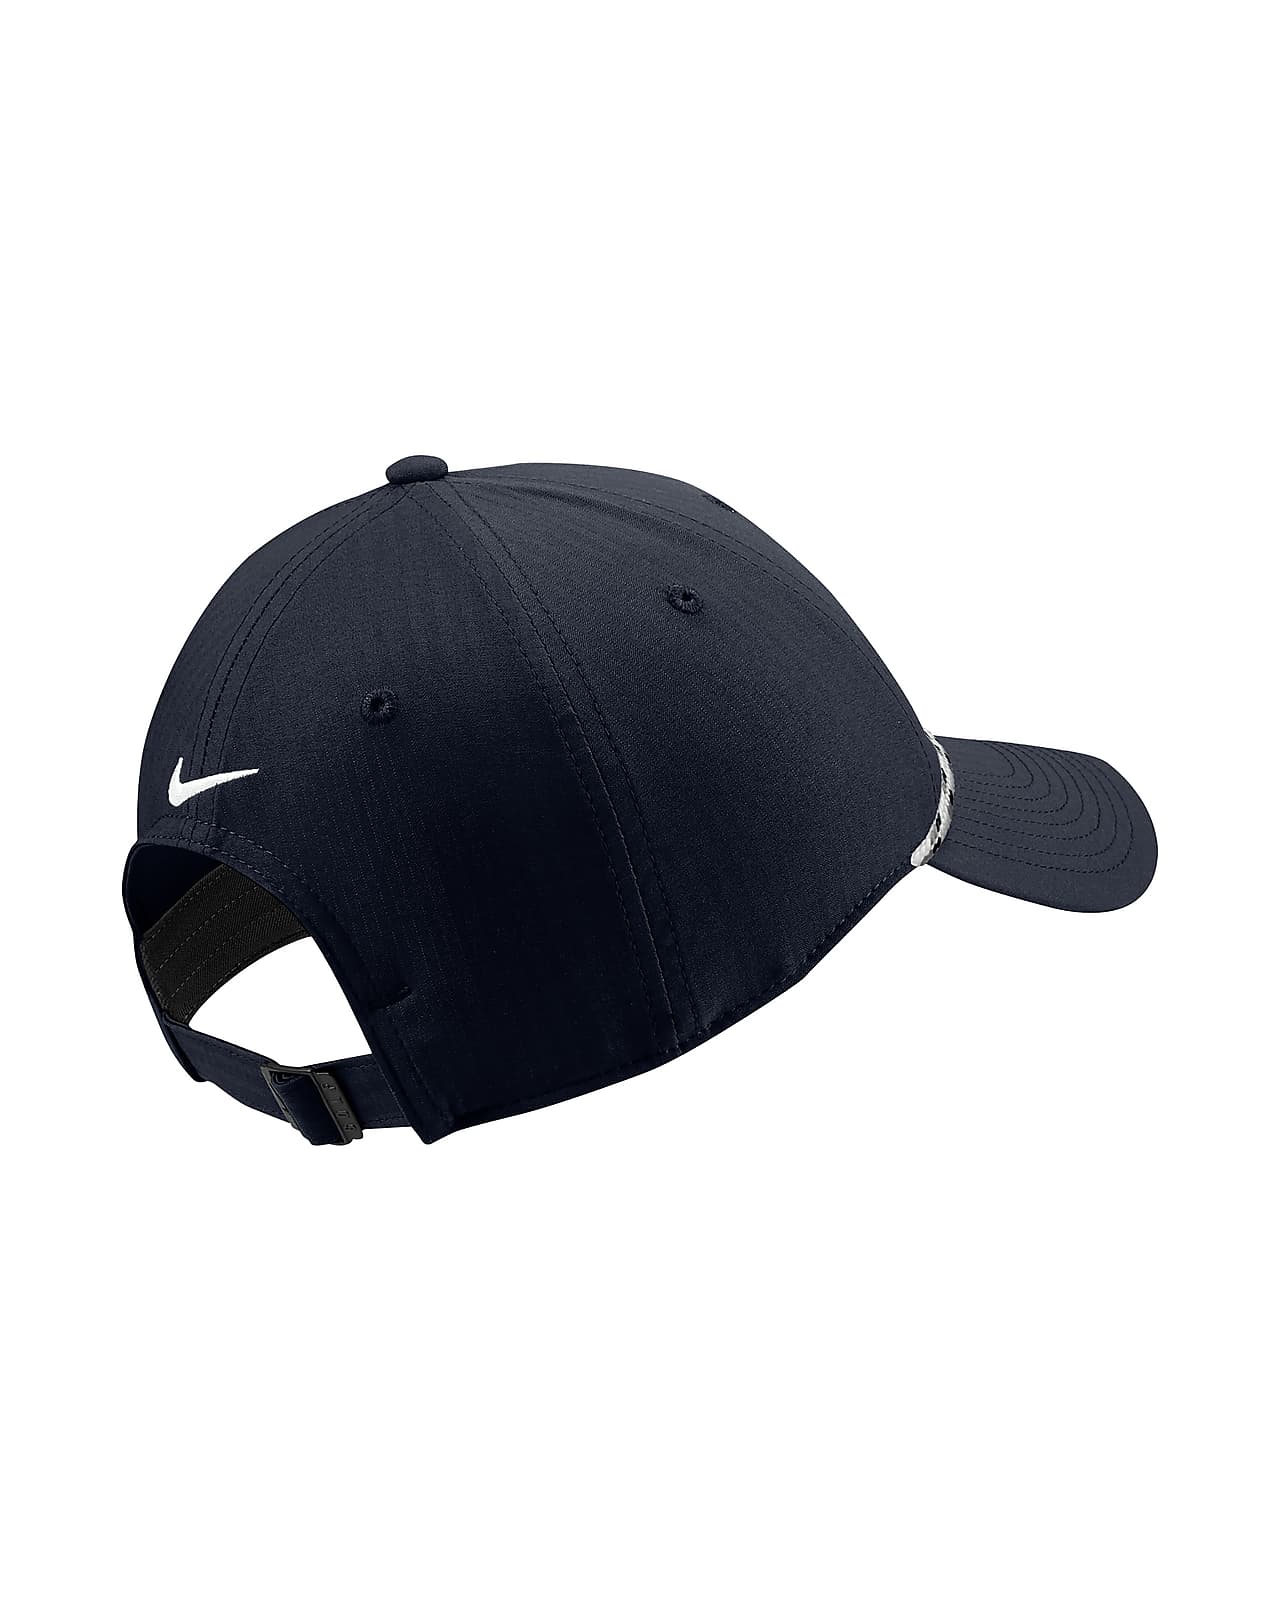 Men's L91 Tech Adjustable Cap, NIKE, Hats, Men's